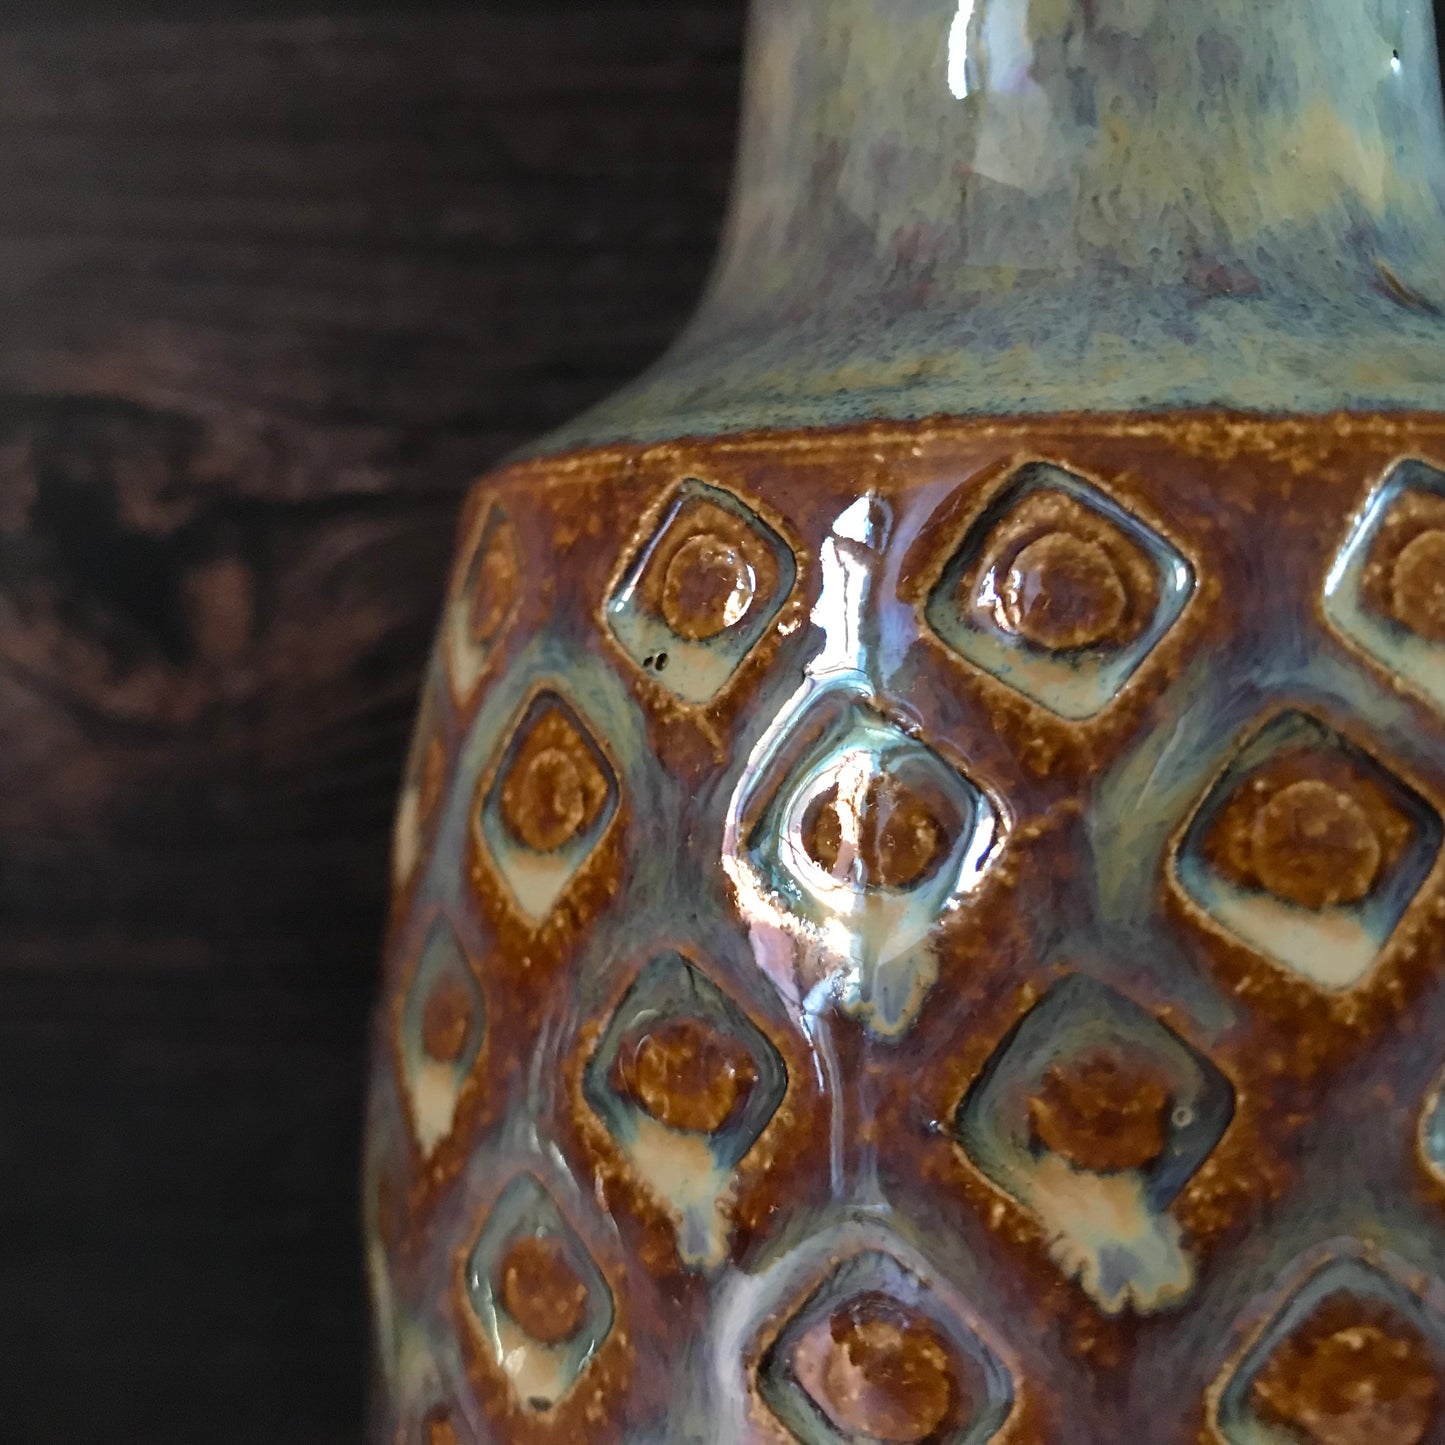 Soholm Pottery Danish Ceramic Table Lamp Pineapple Scandi Design 3001